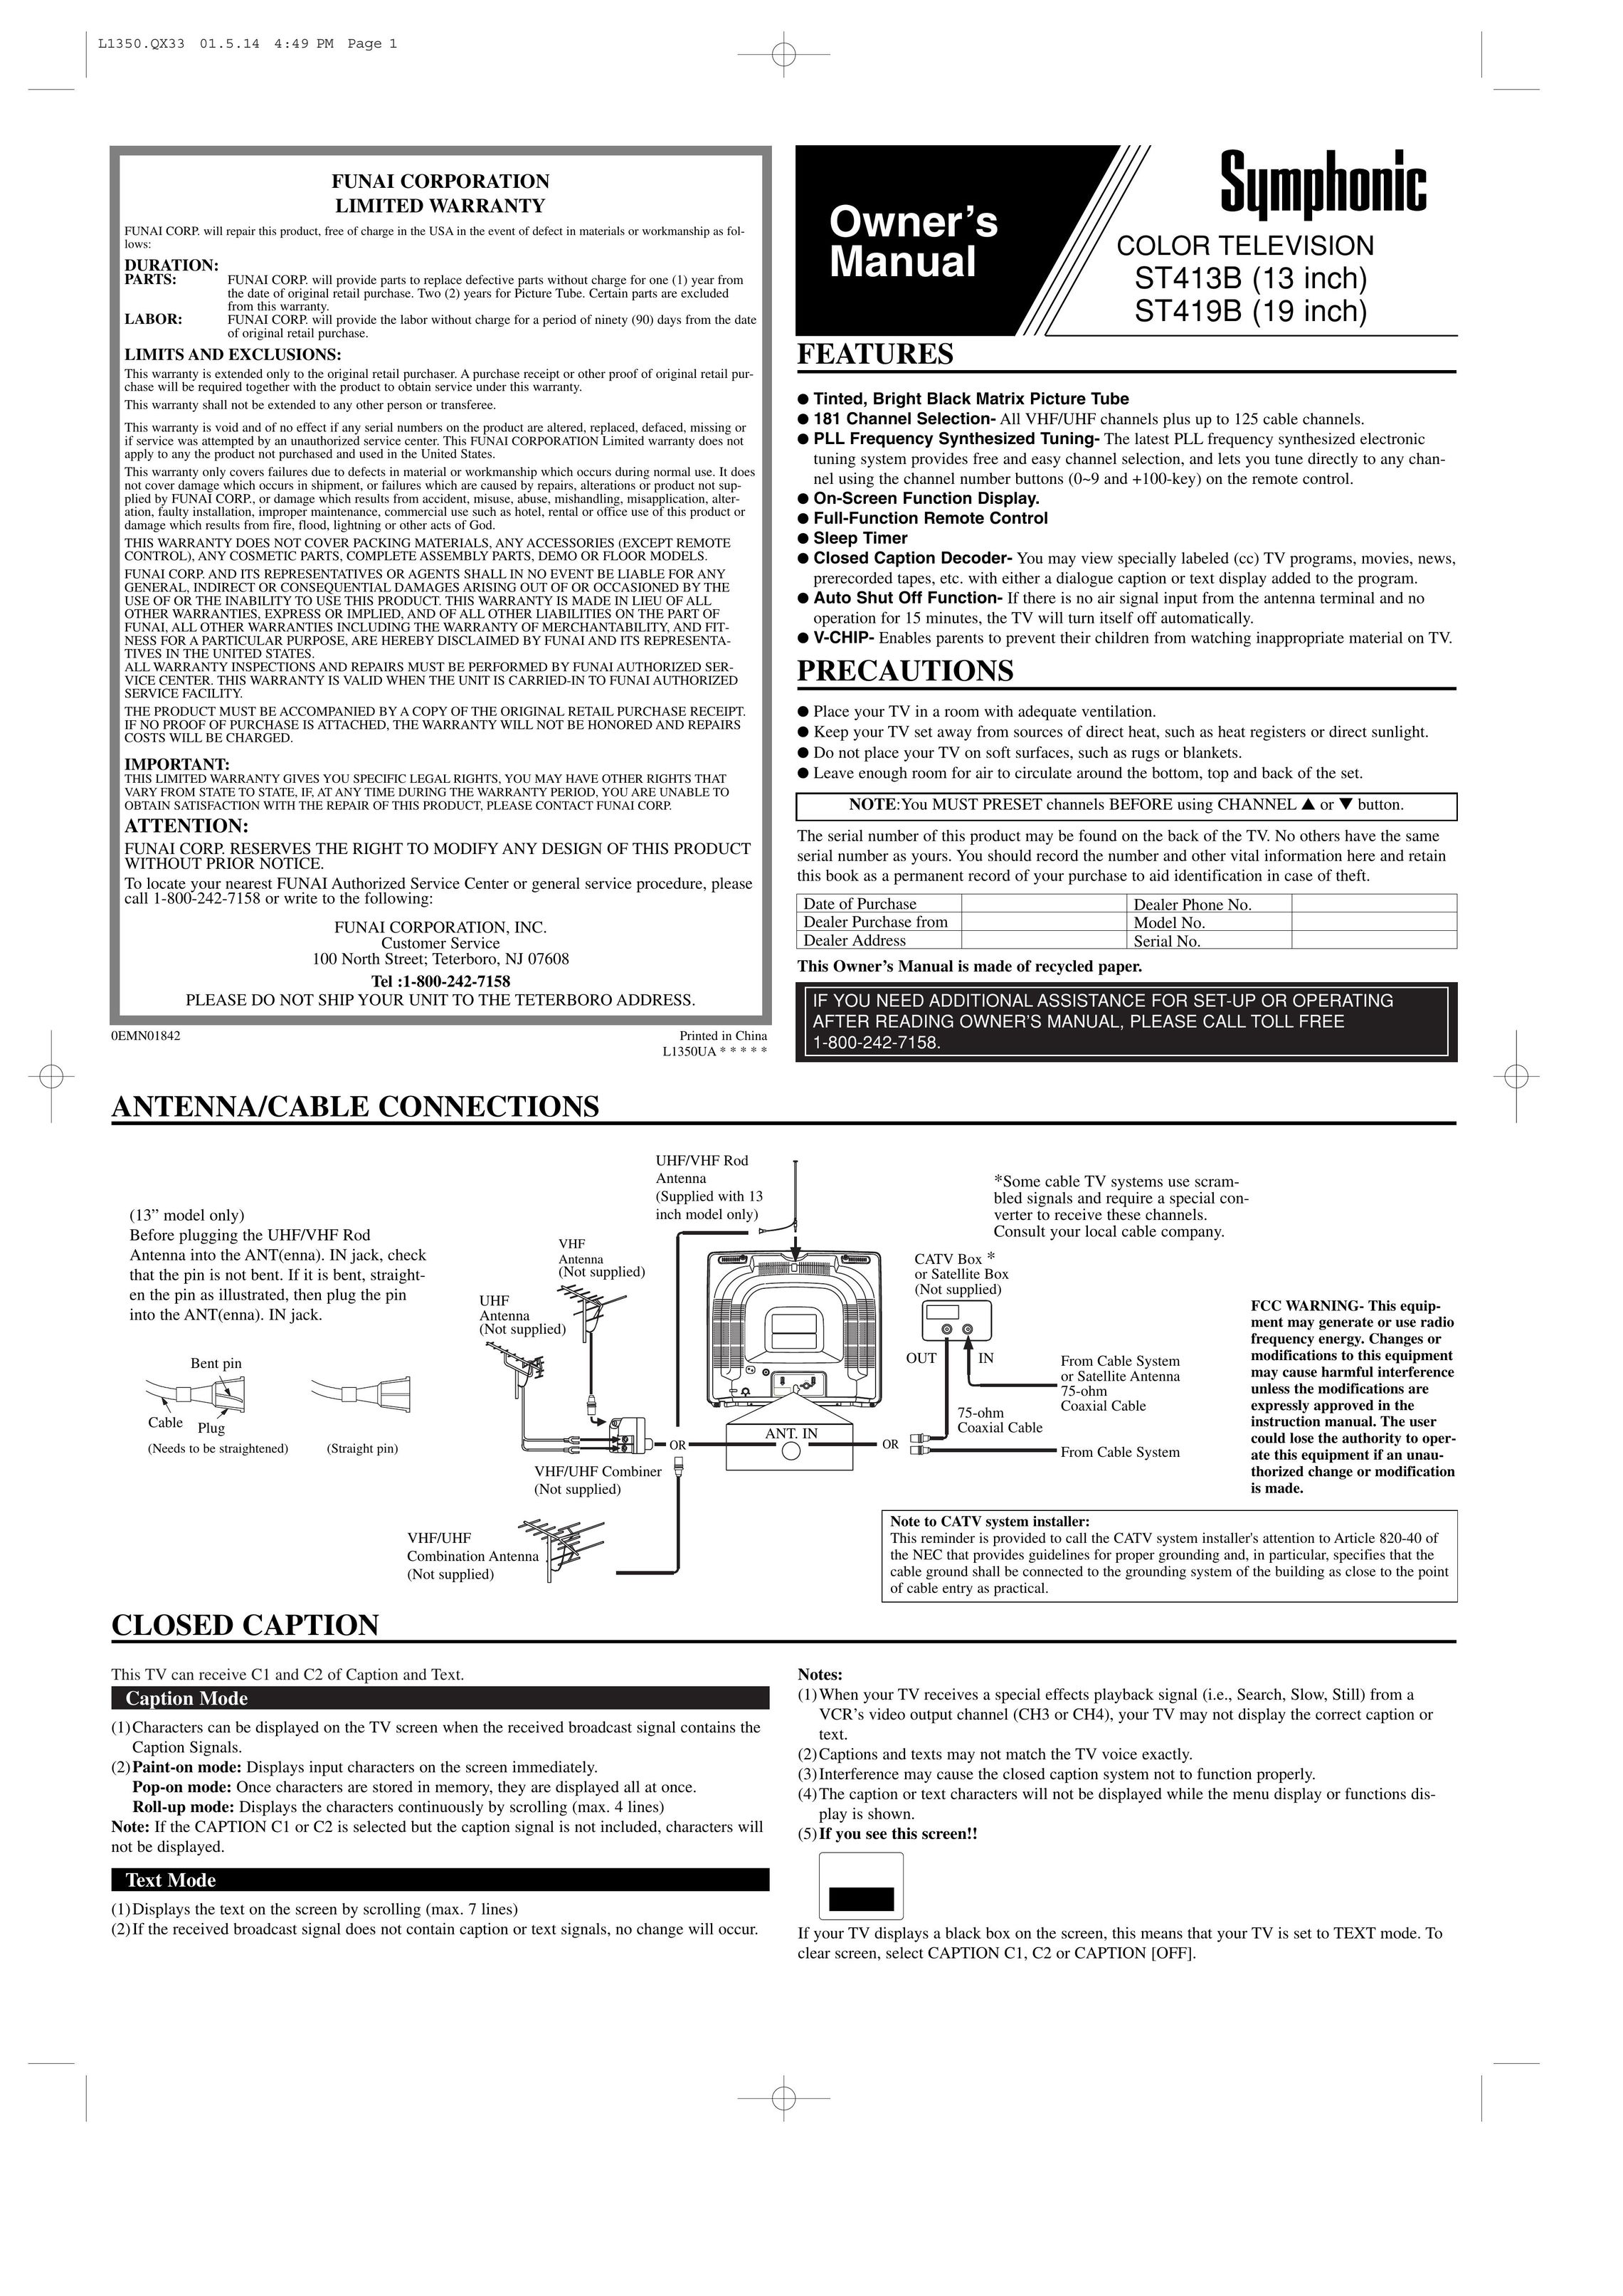 Symphonic ST413B, ST419B CRT Television User Manual